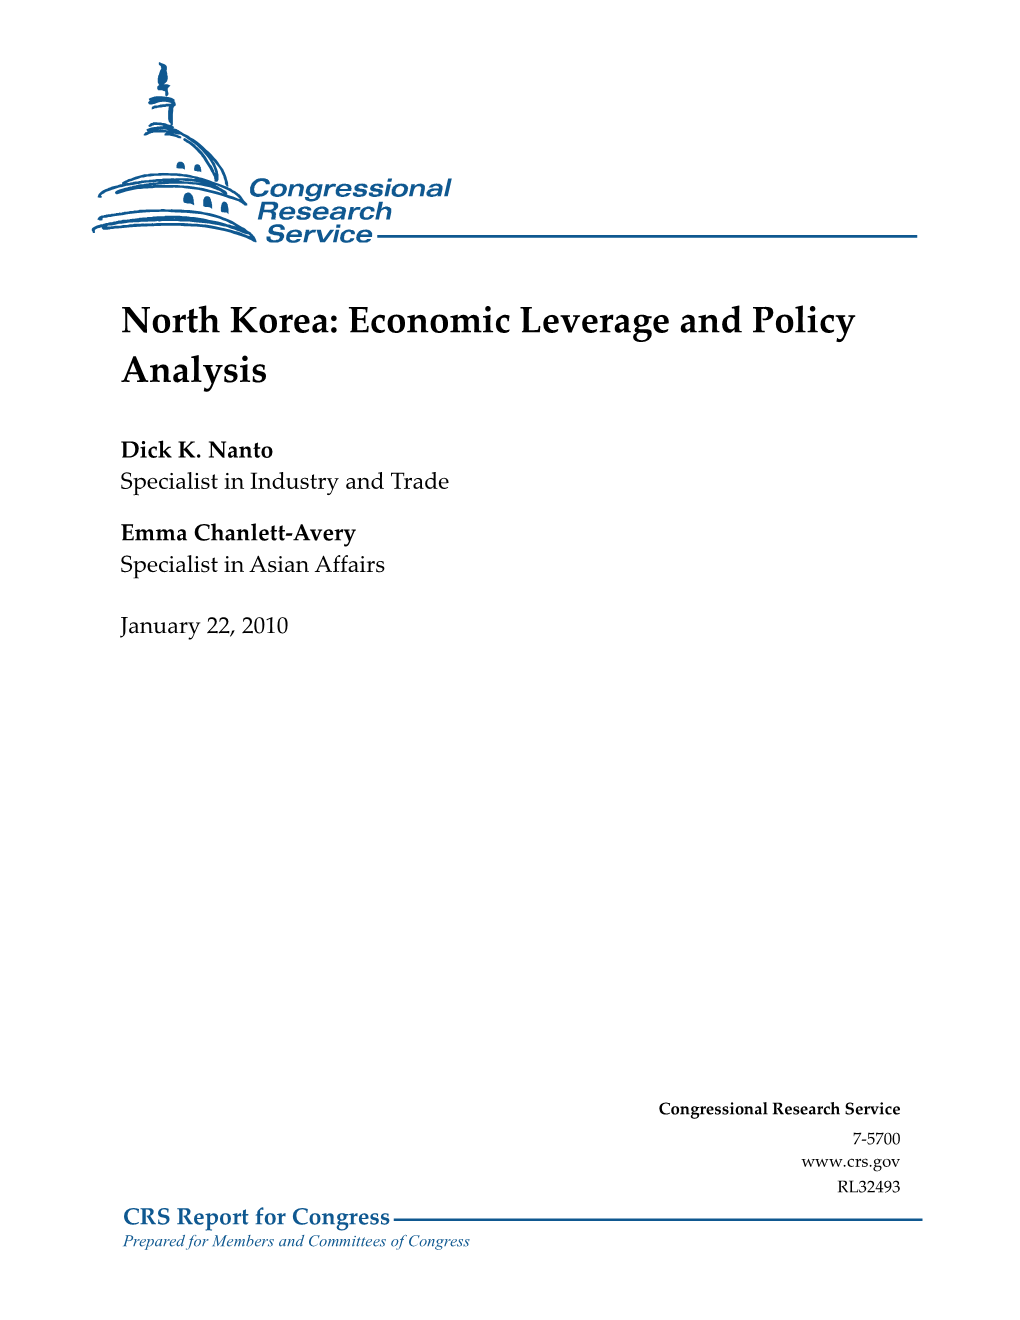 North Korea: Economic Leverage and Policy Analysis